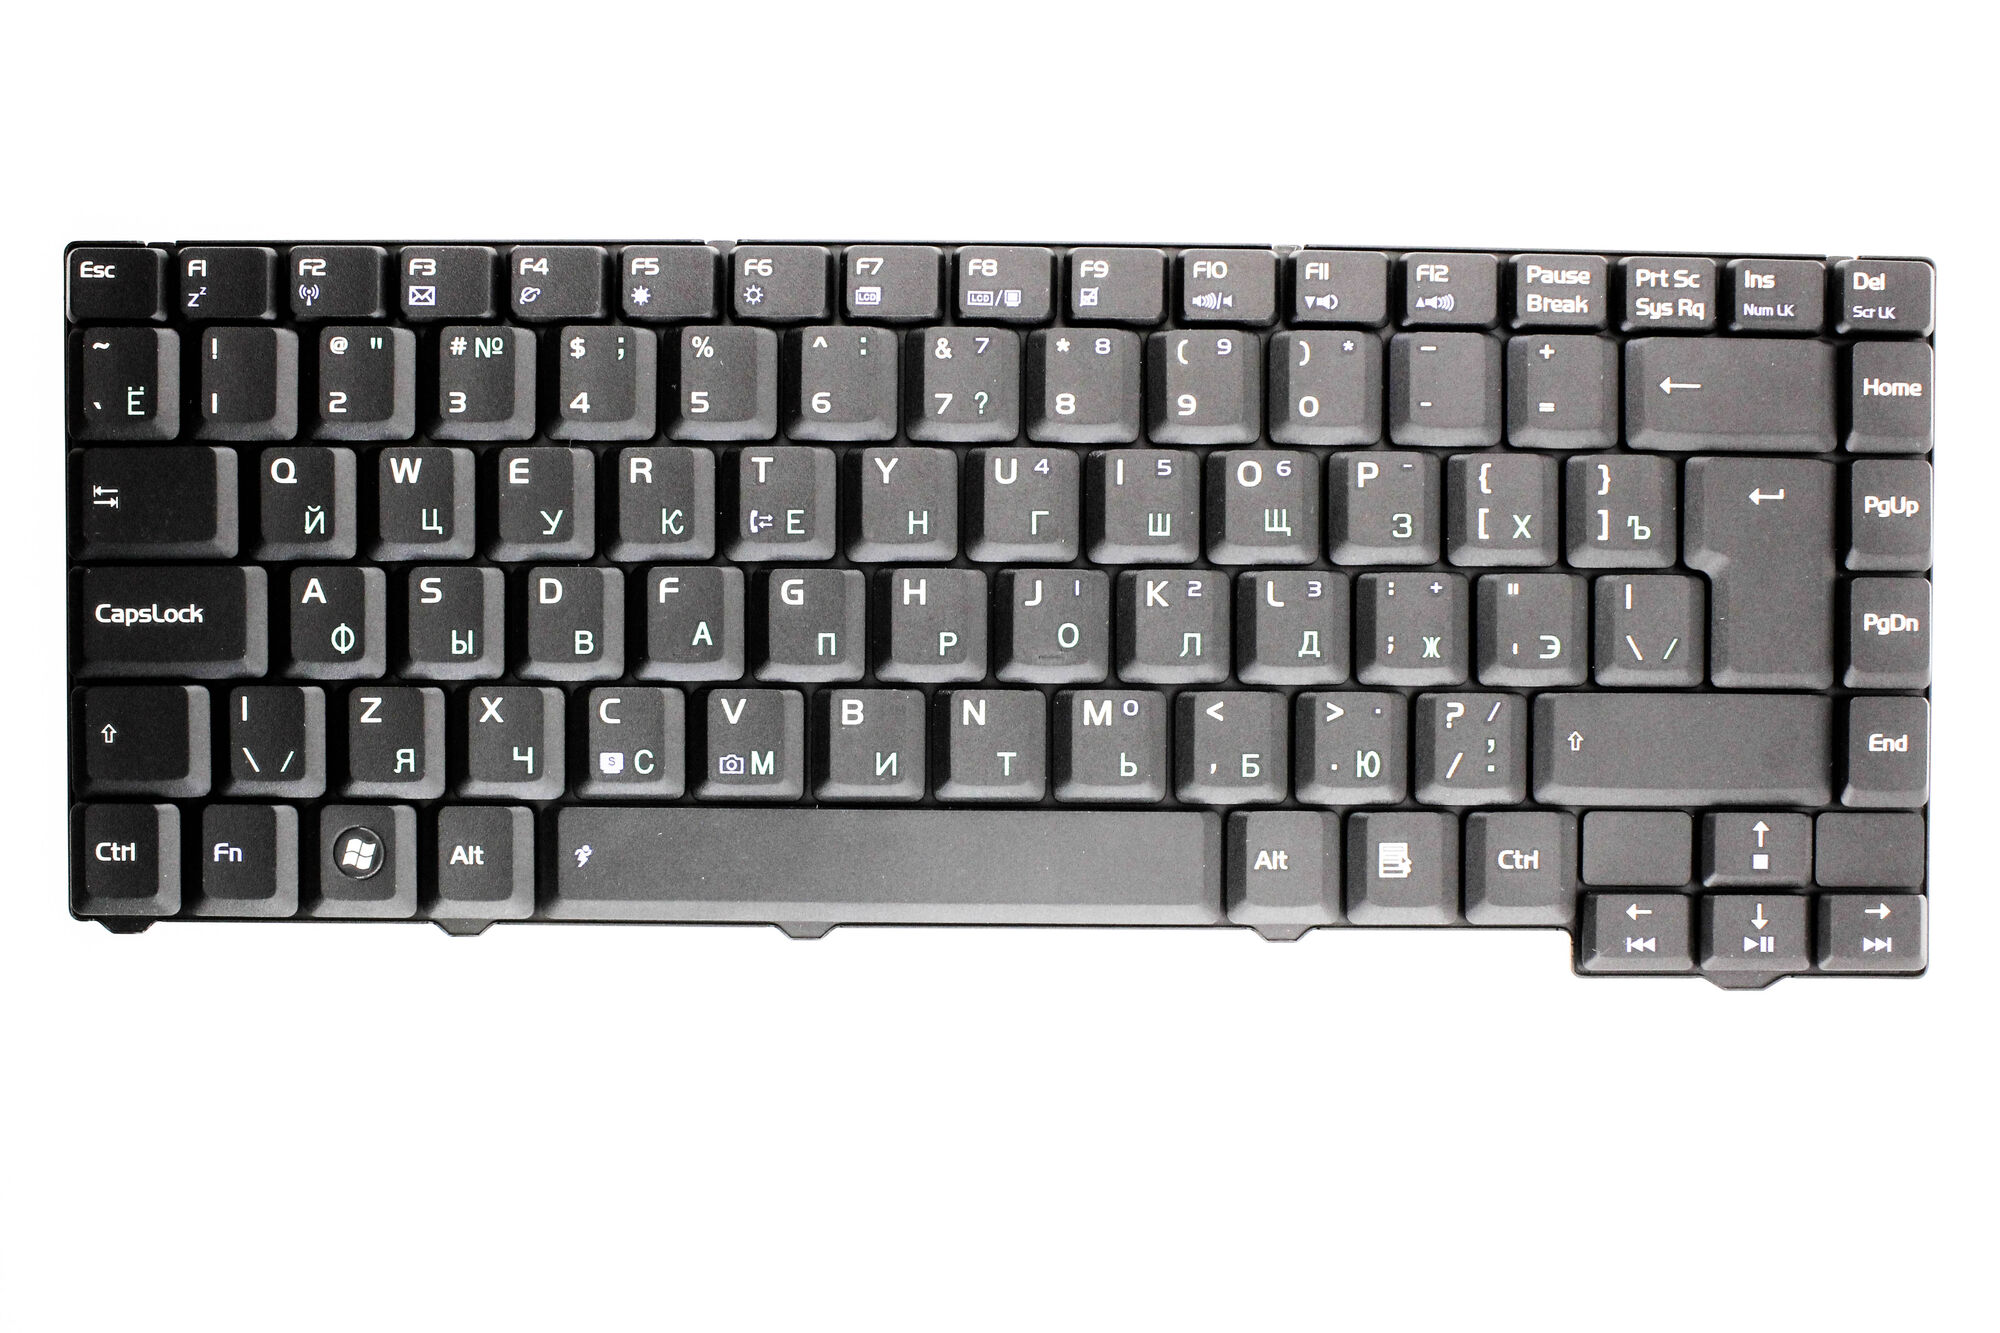 Клавиатура для Asus F3 Z53 24pin p/n: K012462A1, 04GNI11KUS00, 04GNG51KUS03, 04GNI11KRU00